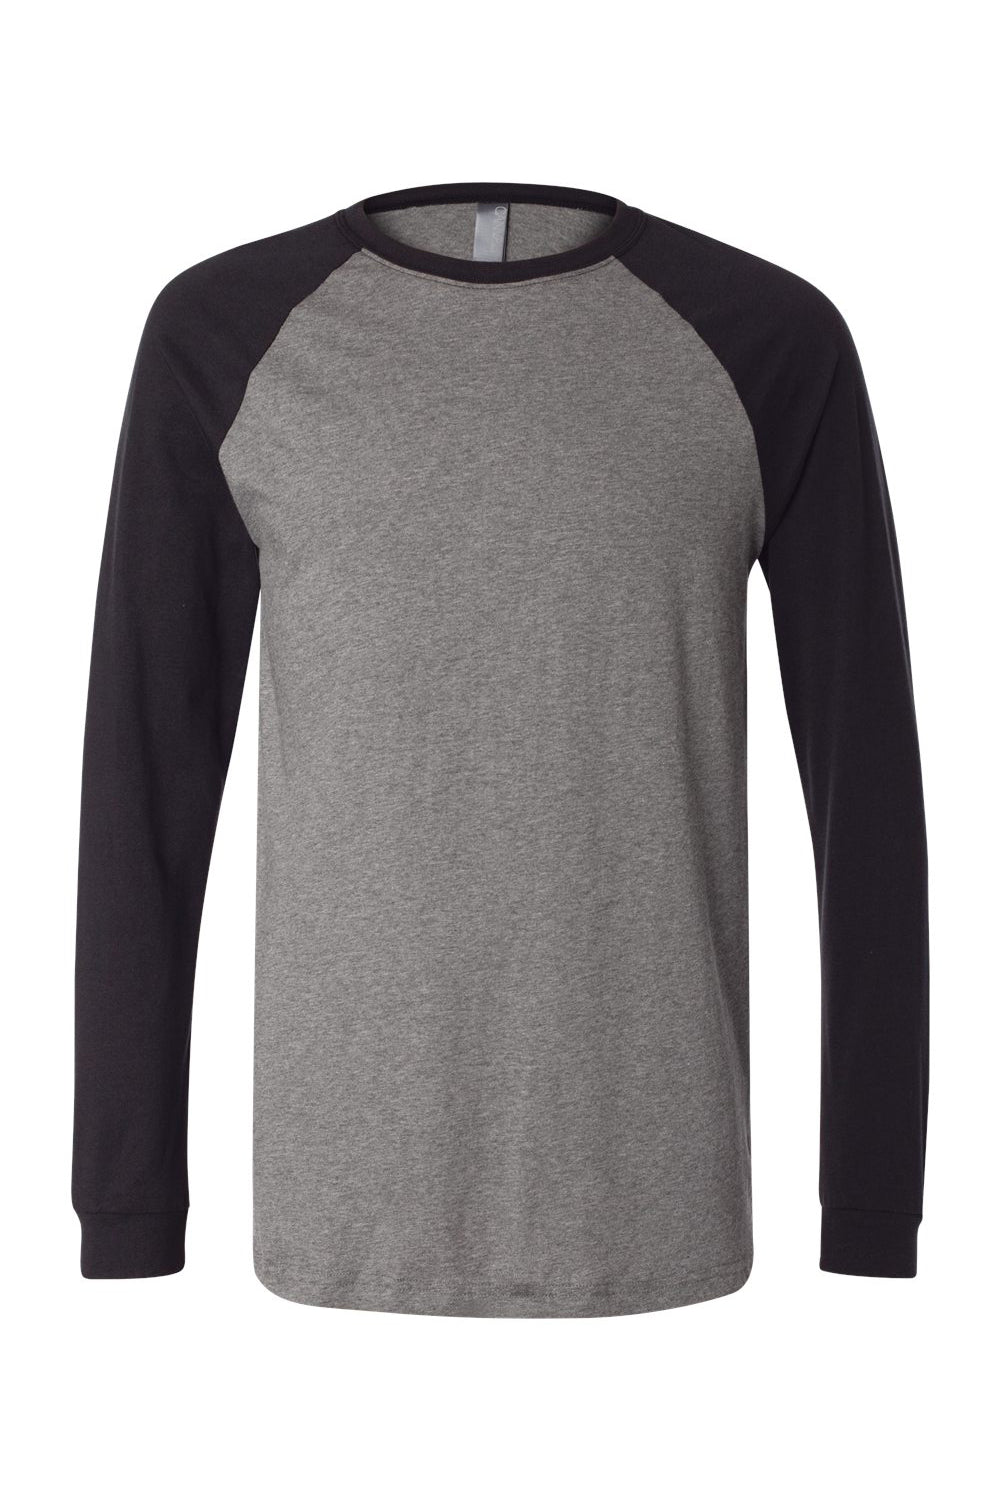 Bella + Canvas 3000C/3000 Mens Jersey Long Sleeve Crewneck T-Shirt Heather Deep Grey/Black Flat Front